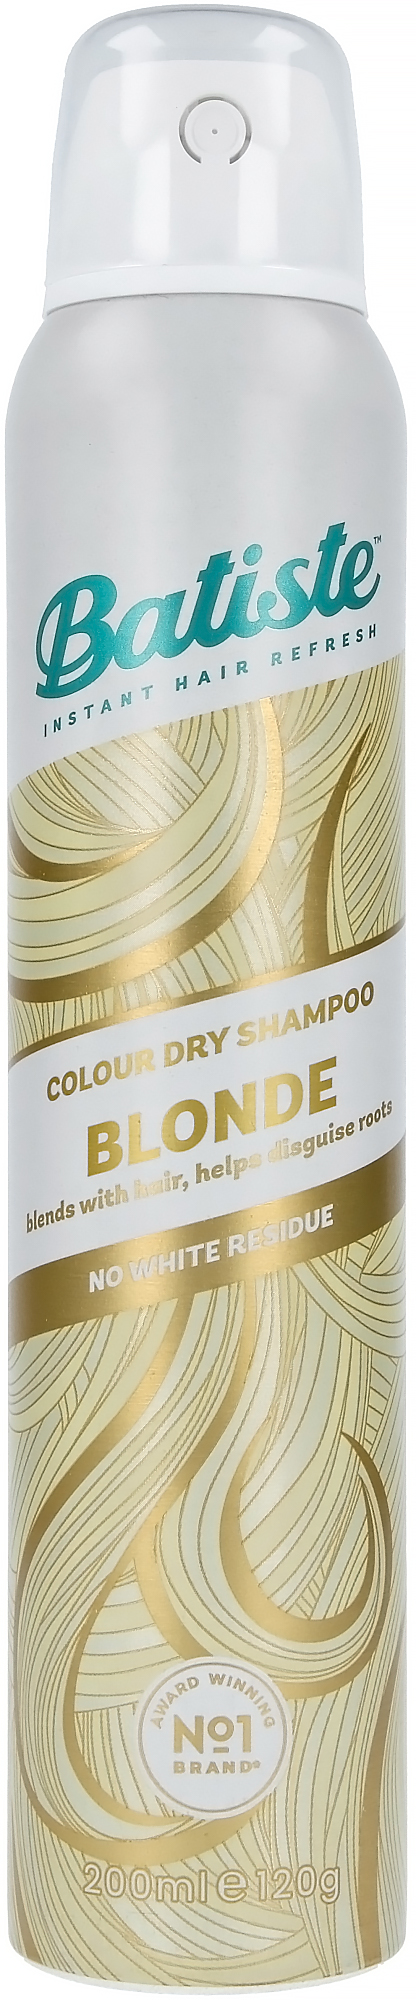 Batiste Dry Shampoo Light Blonde